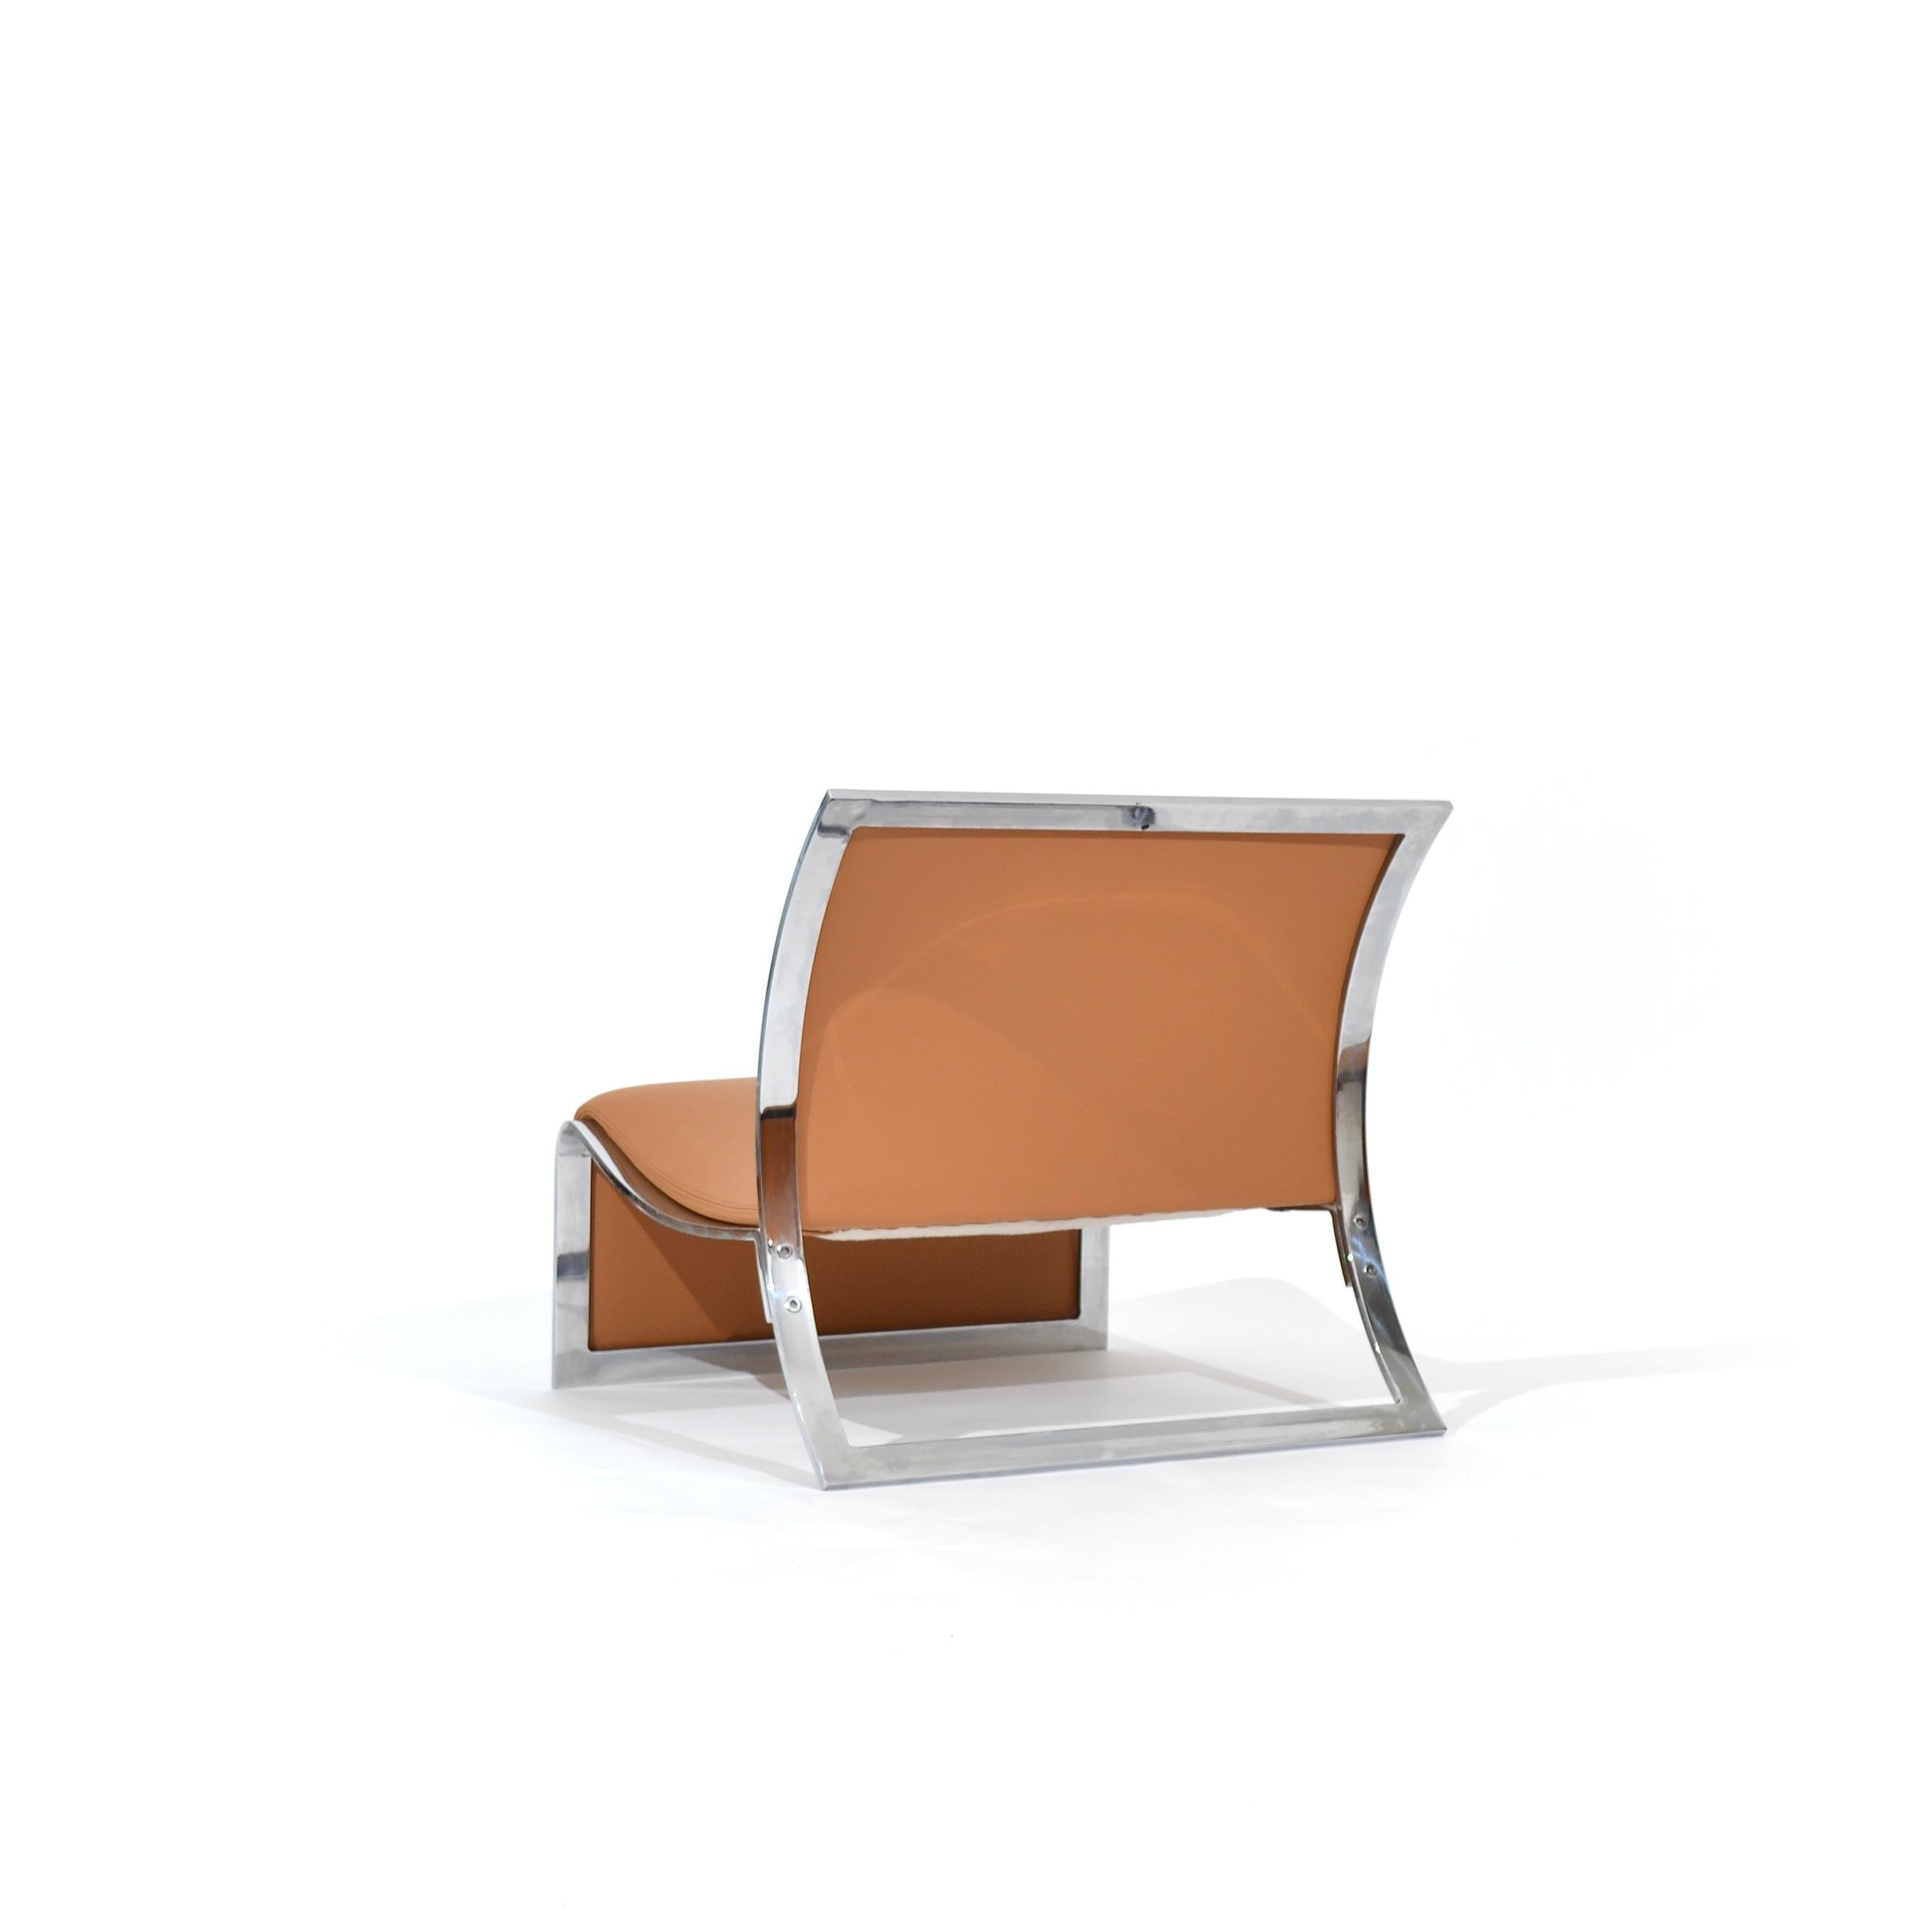 Saporiti leather lounge chairs, Vittorio Introini, Italy, 1965 For Sale 1